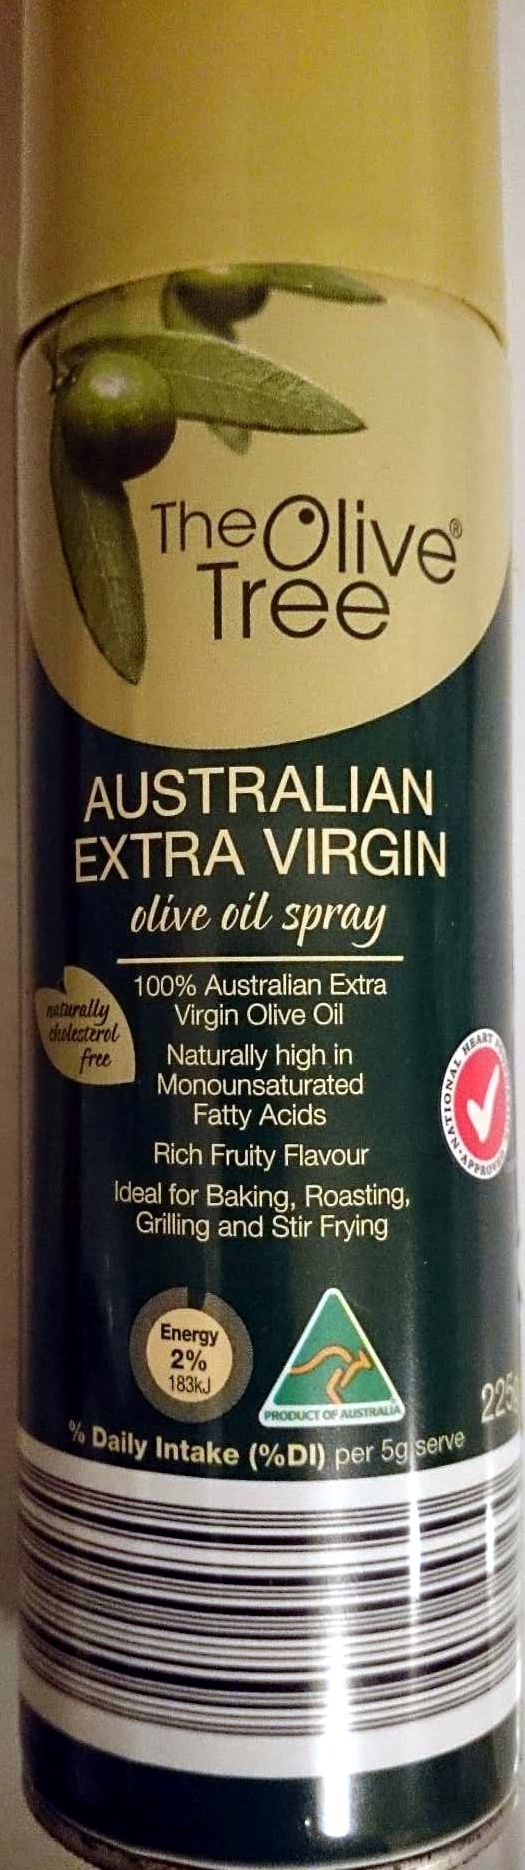 Australian Extra Virgin Olive Oil Spray - Product